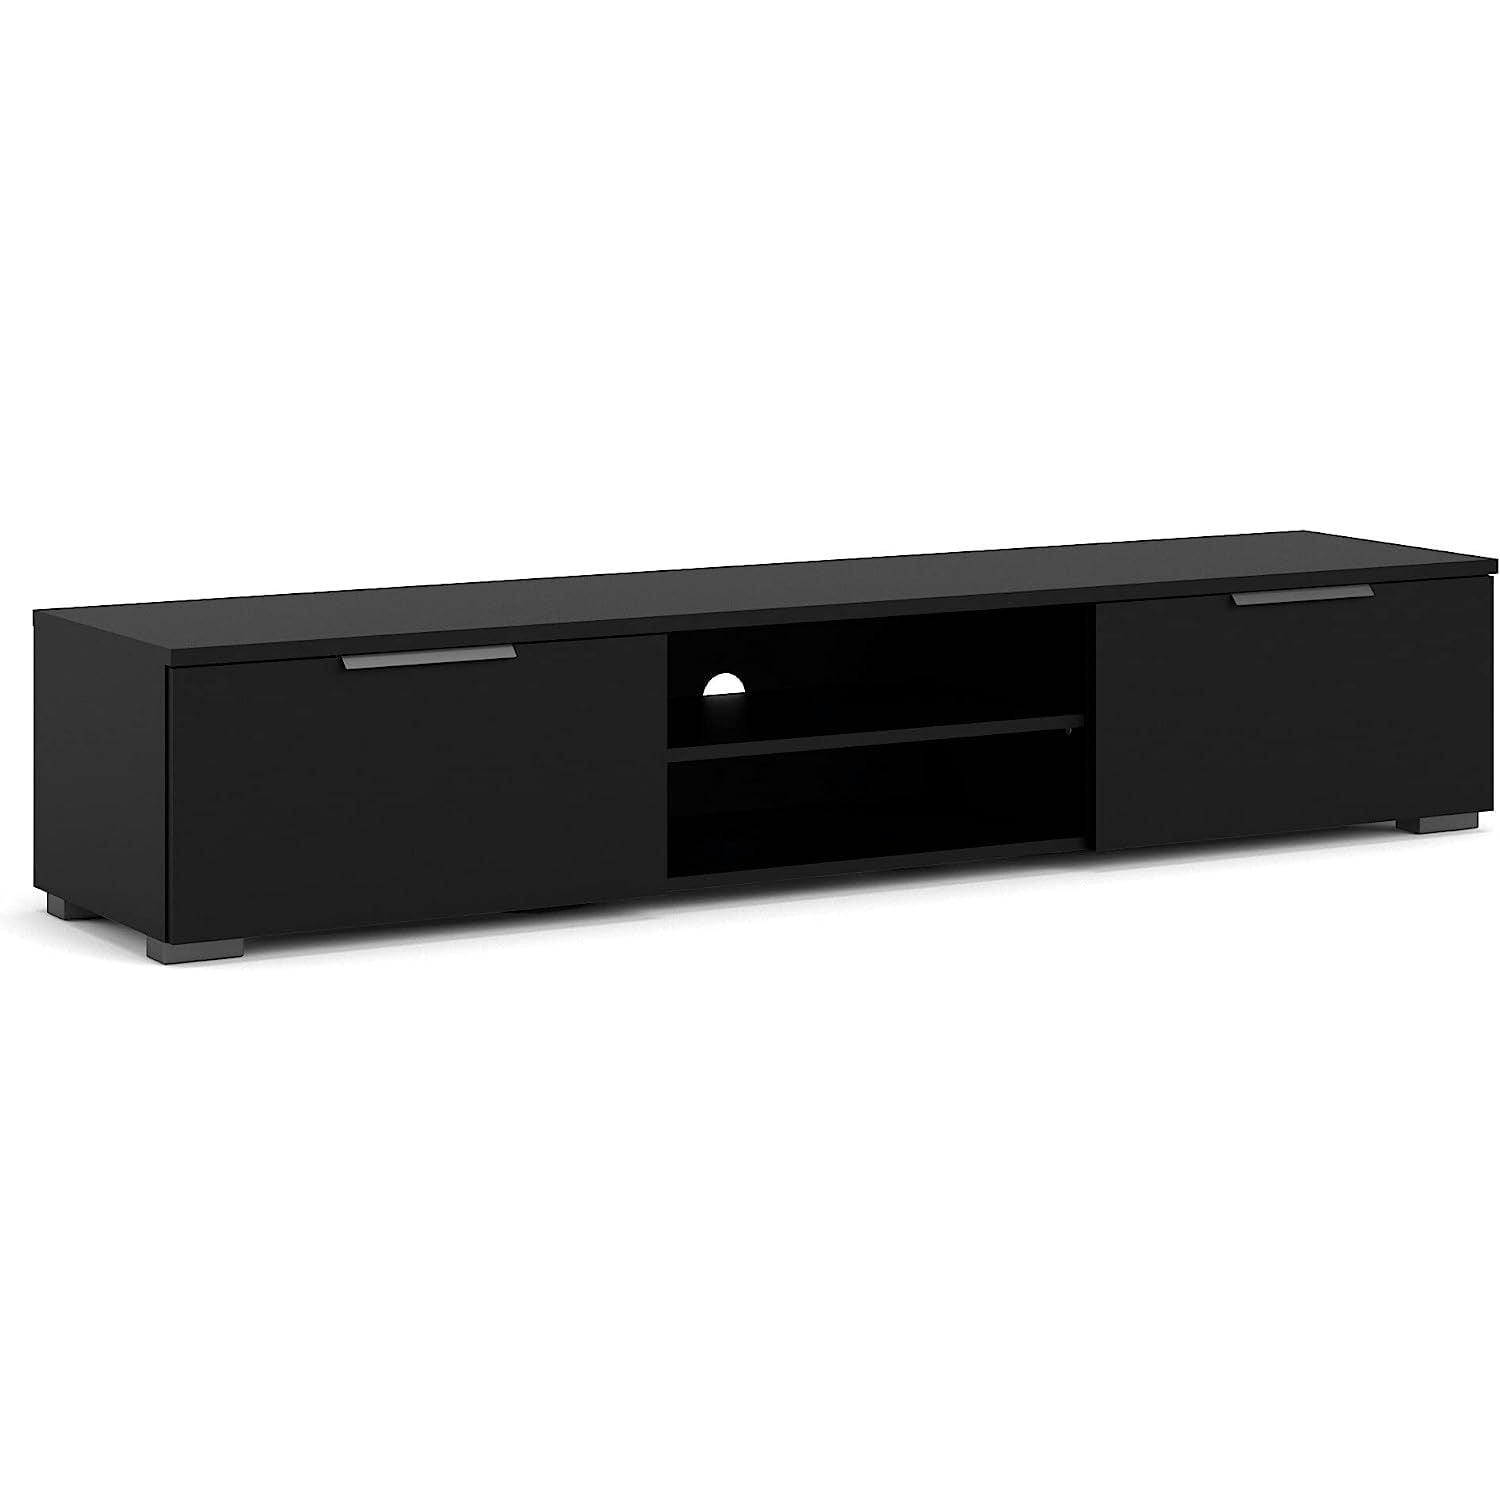 Sleek Danish Modern Black Matte Wood TV Stand with Storage